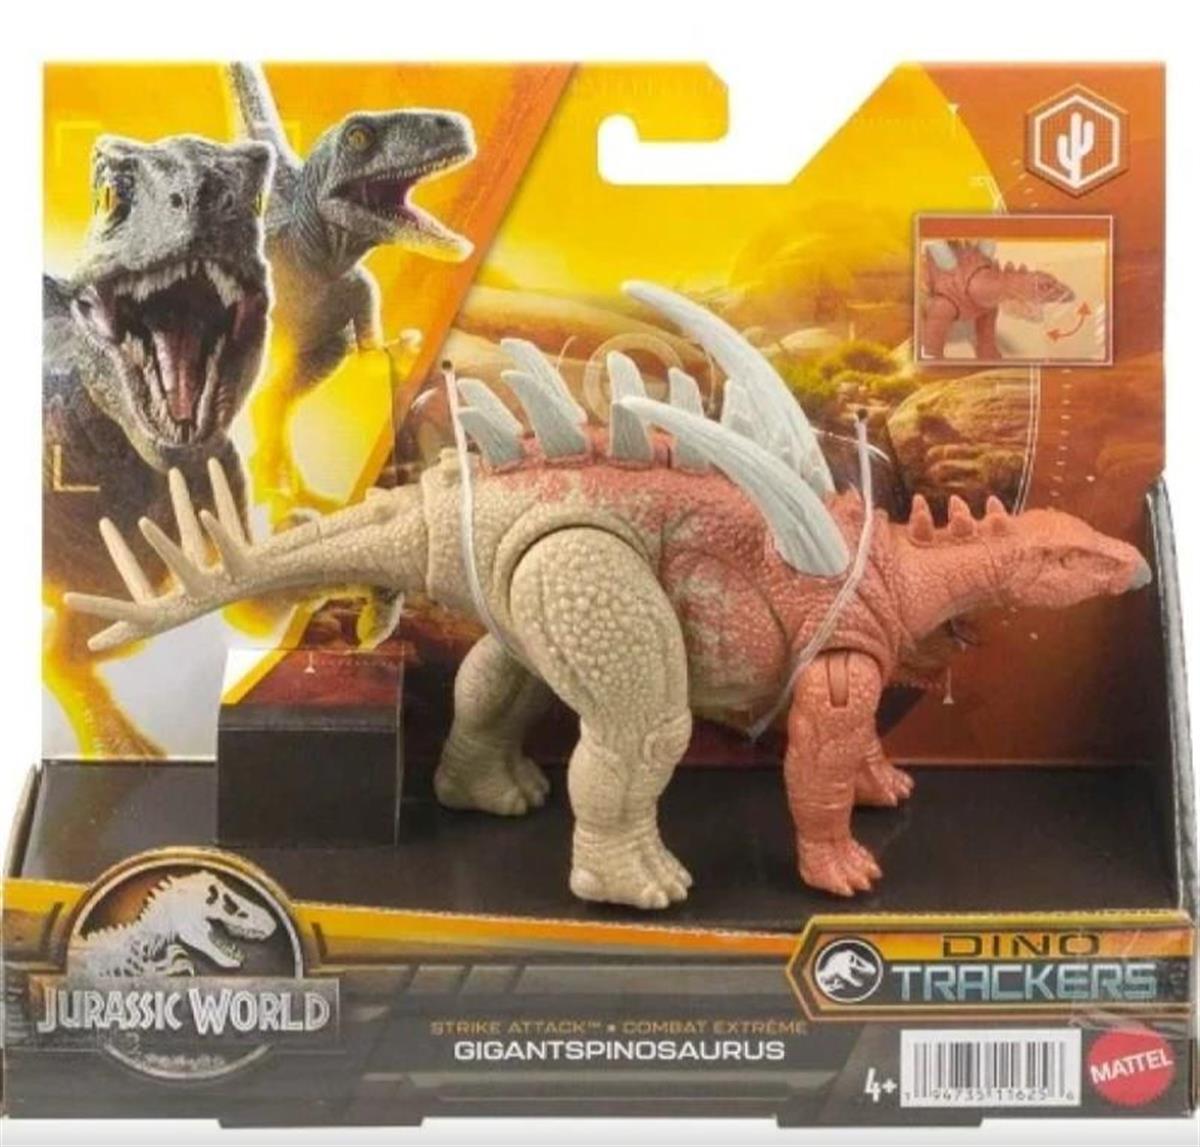 Jurassic World İz Sürücü Dinozor Figürleri HLN63-HLN68 | Toysall